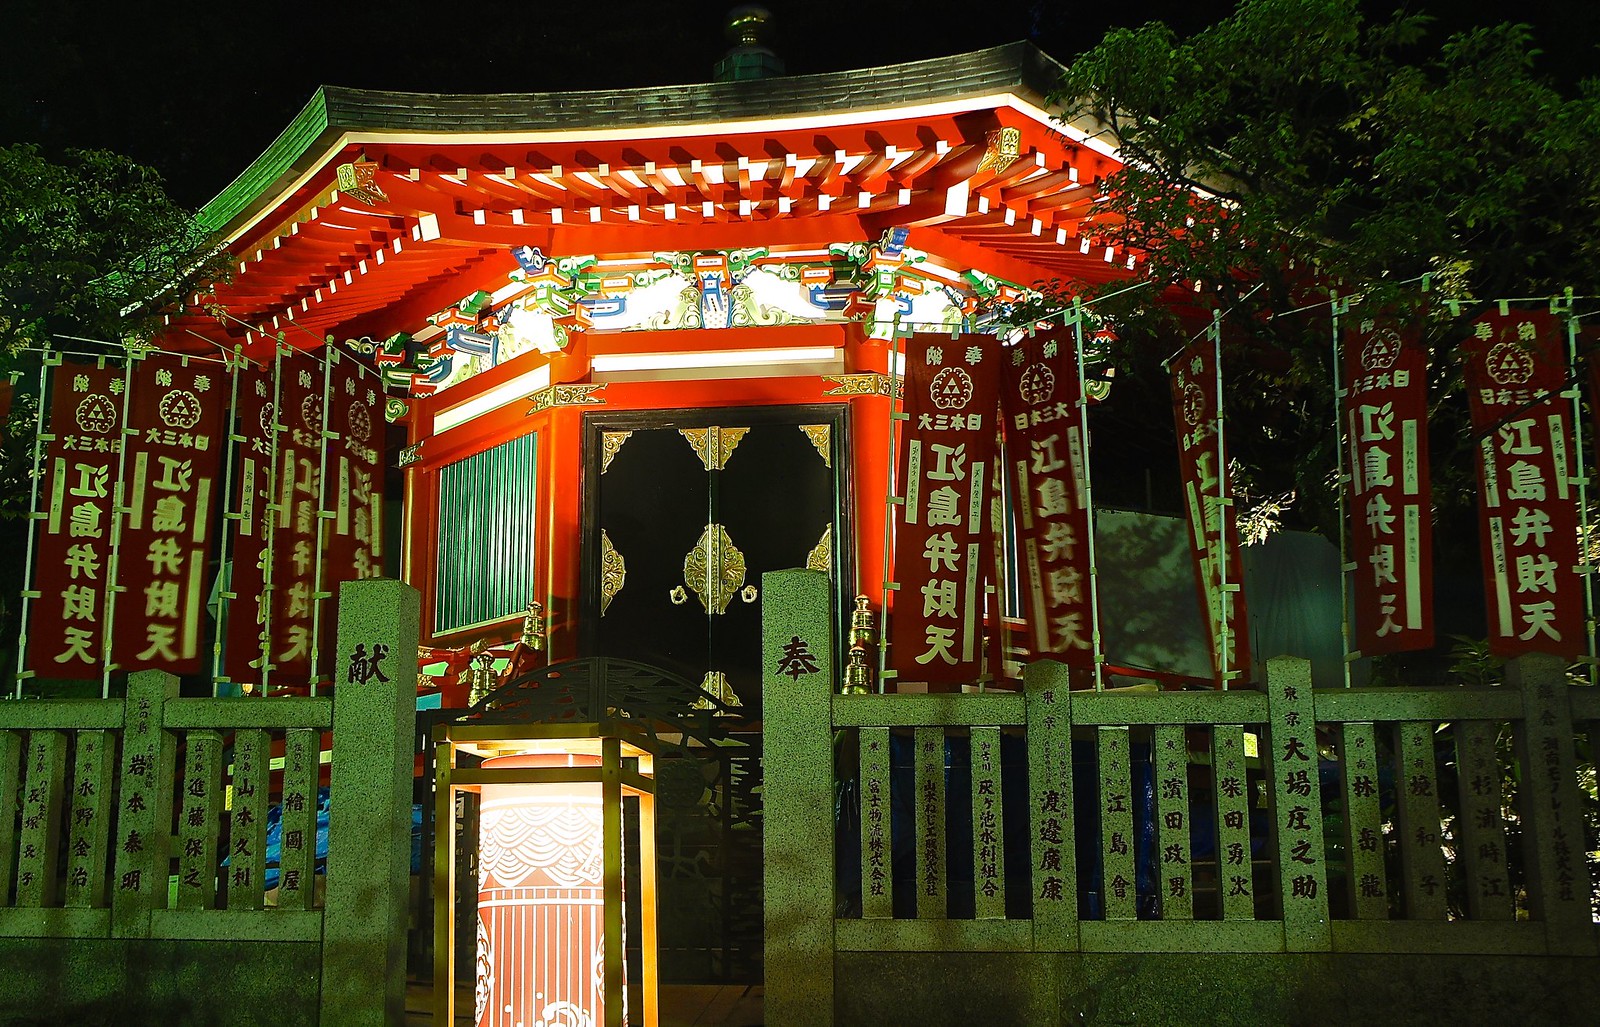 Enoshima Candle - Night time lantern light up in summer